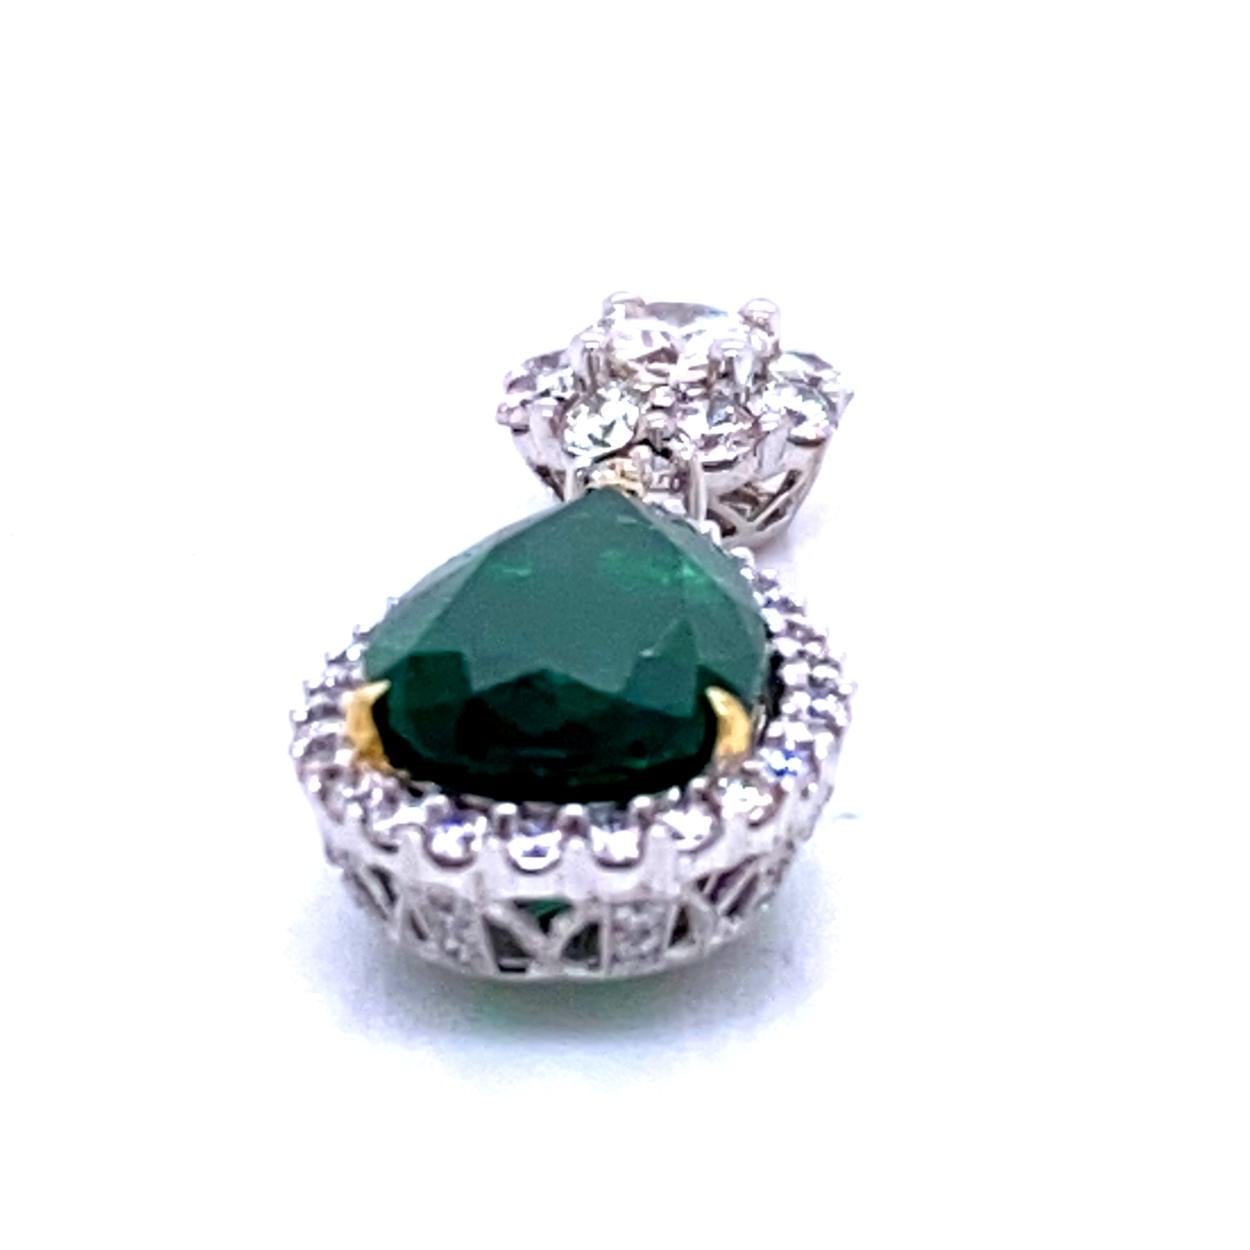 Pear Cut 7.00 Carat Pear Shape Emerald Pendant in 18K Gold with 1.85 Carat Diamonds Halo For Sale